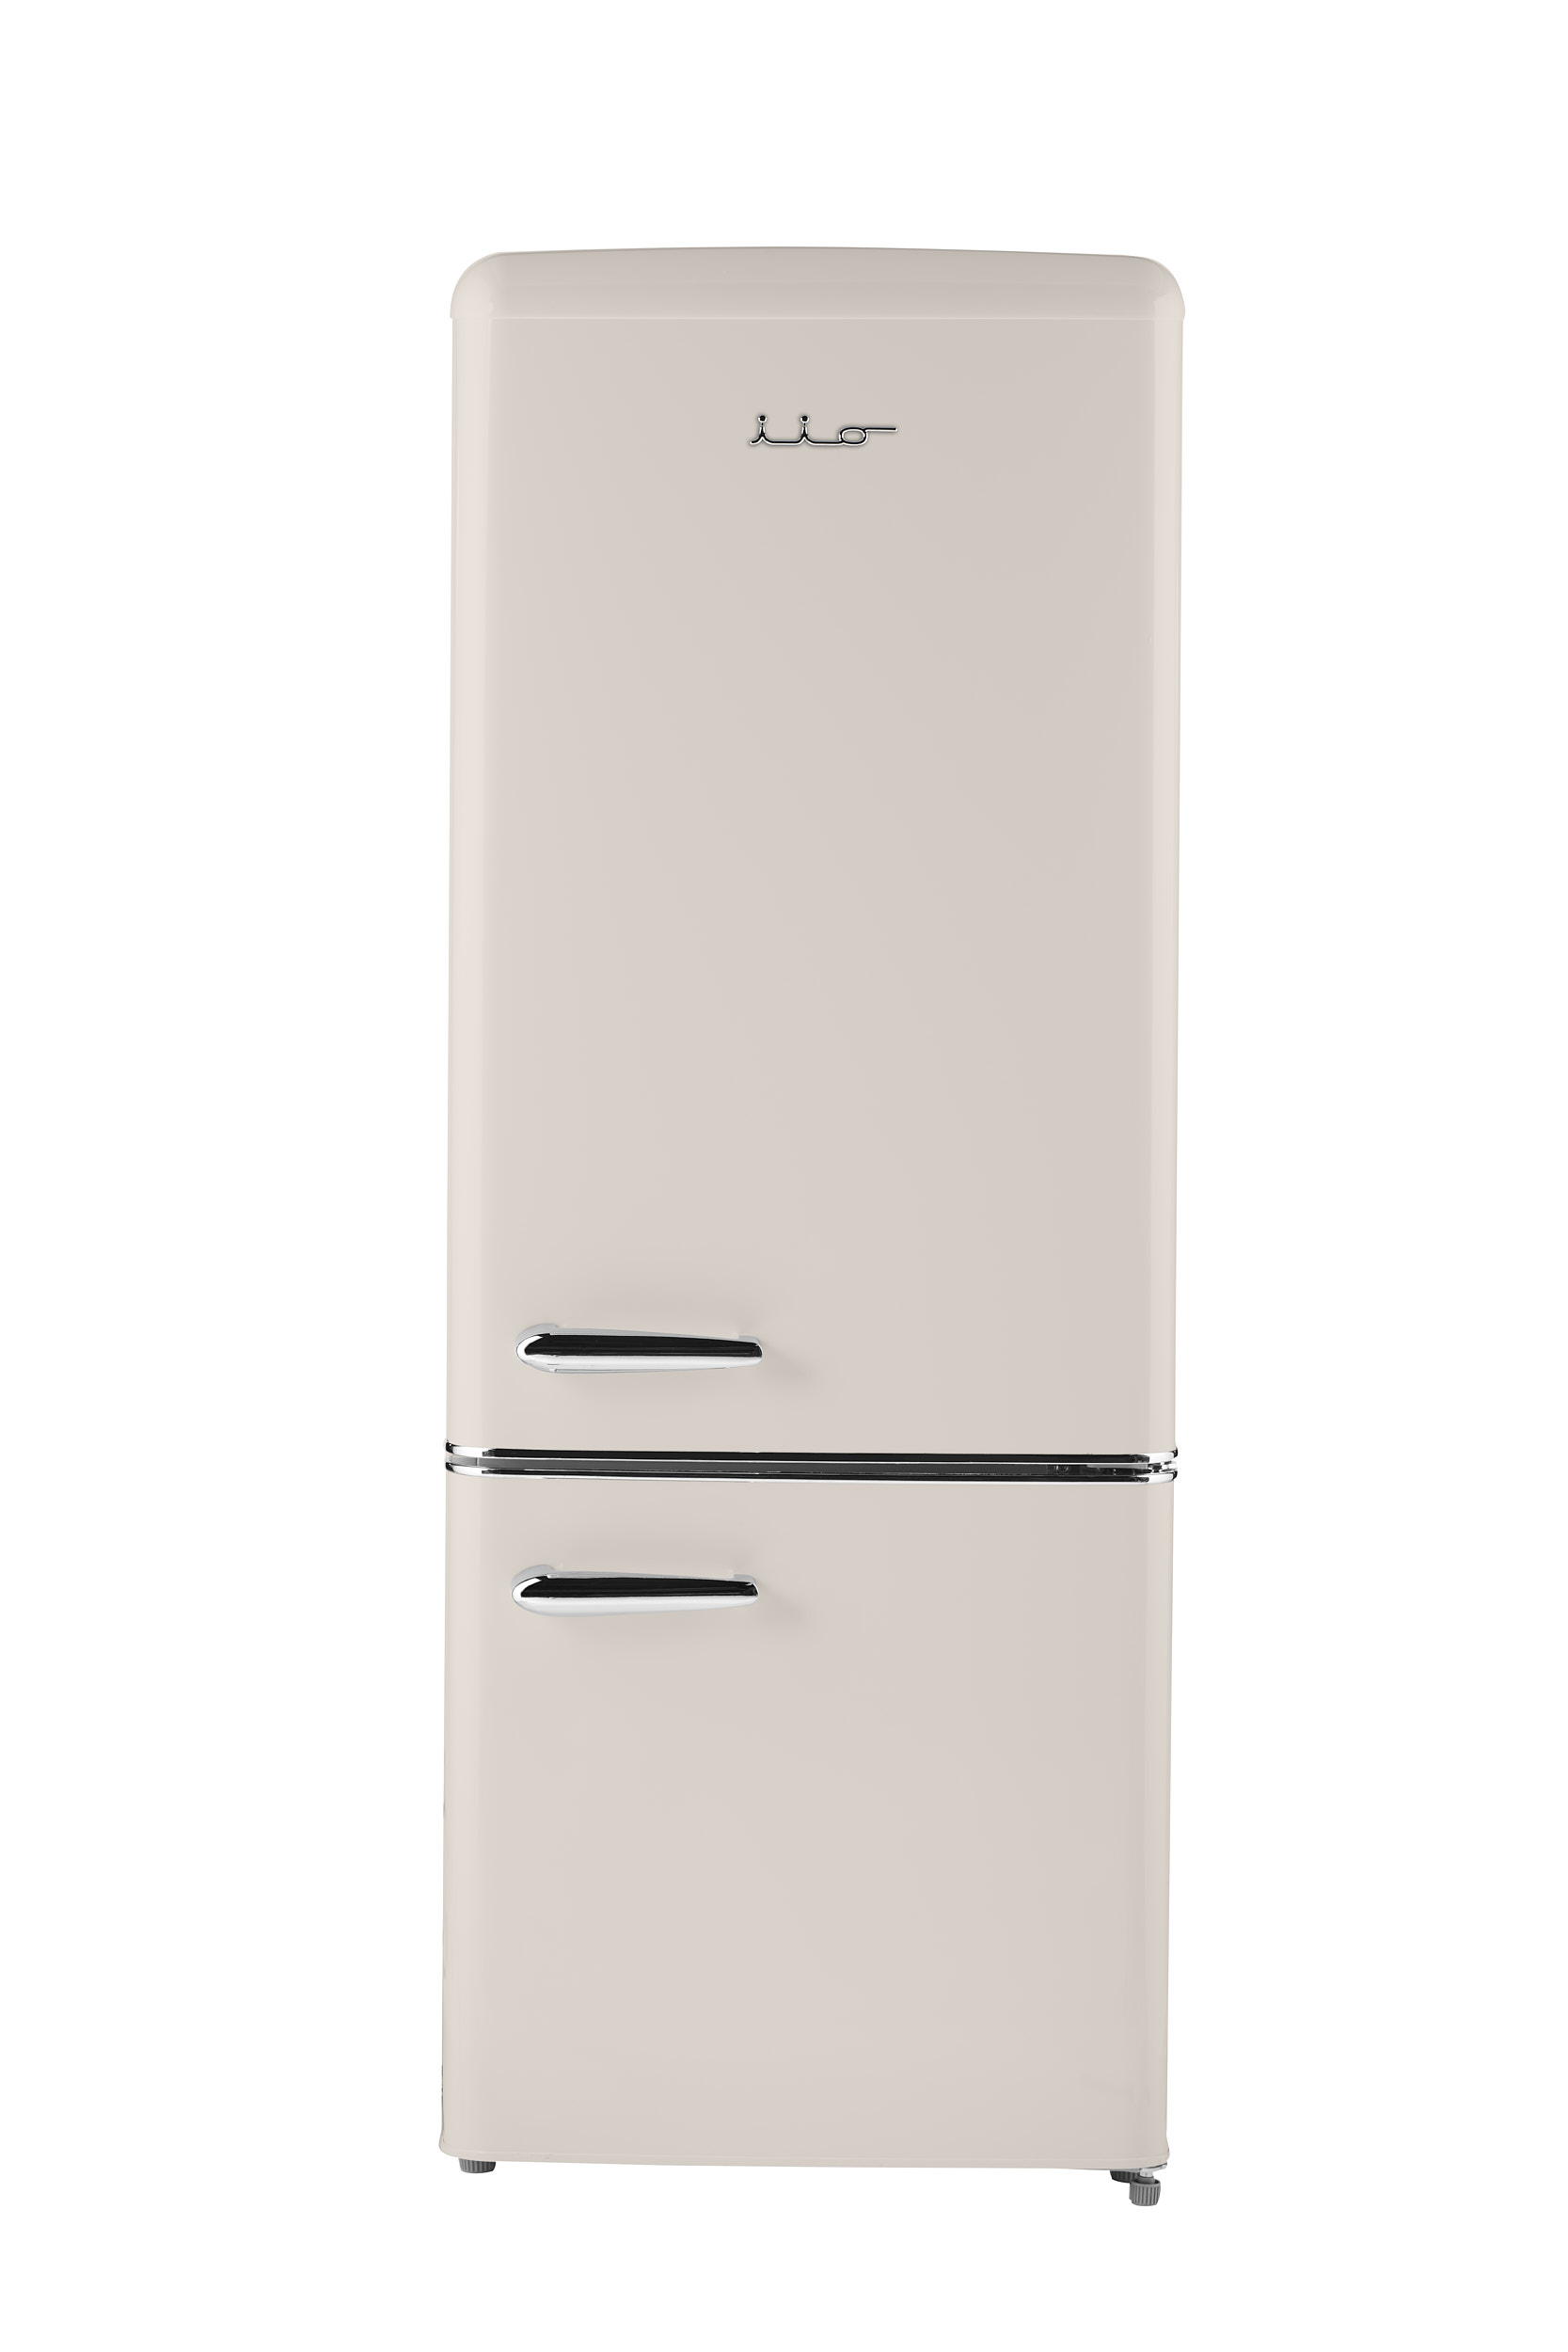  Anukis Compact Refrigerator with Freezer, 3.5 Cu.Ft 2 Door Mini  Fridge For Apartment/Dorm/Office/Family/Basement/Garage Retro Blue :  Appliances